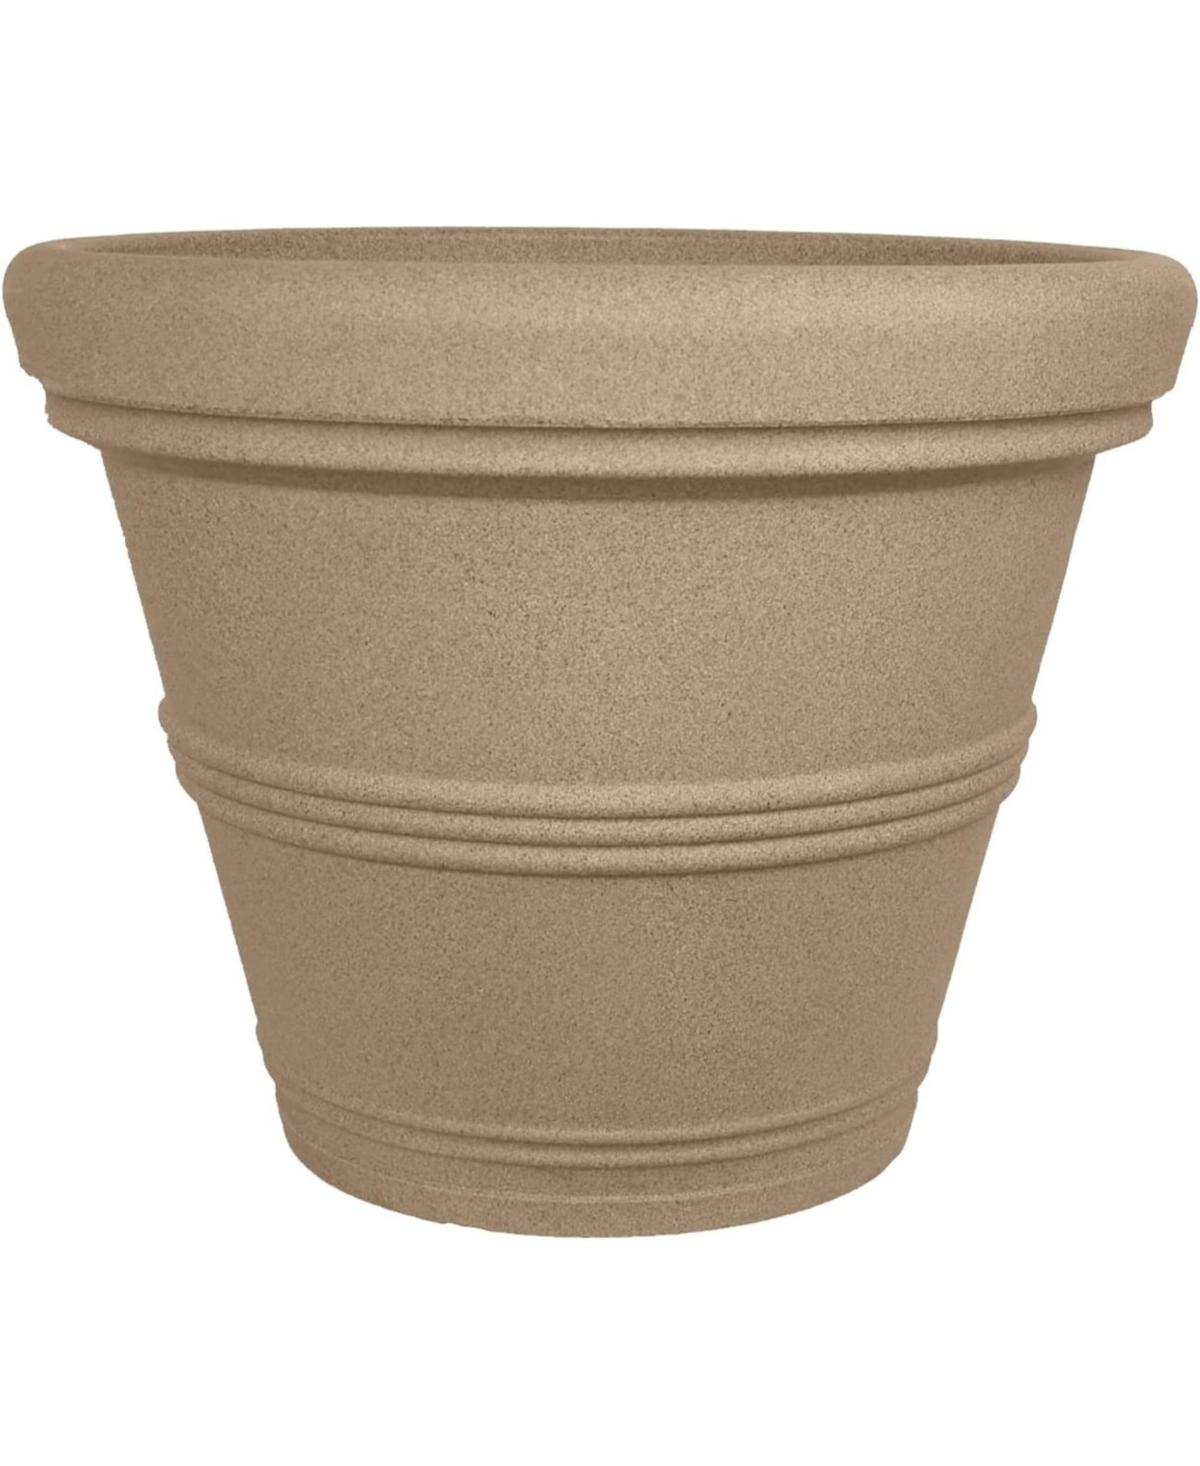 Rolled Rim Plastic Garden Pot, Sandstone, 13.5in - Brown